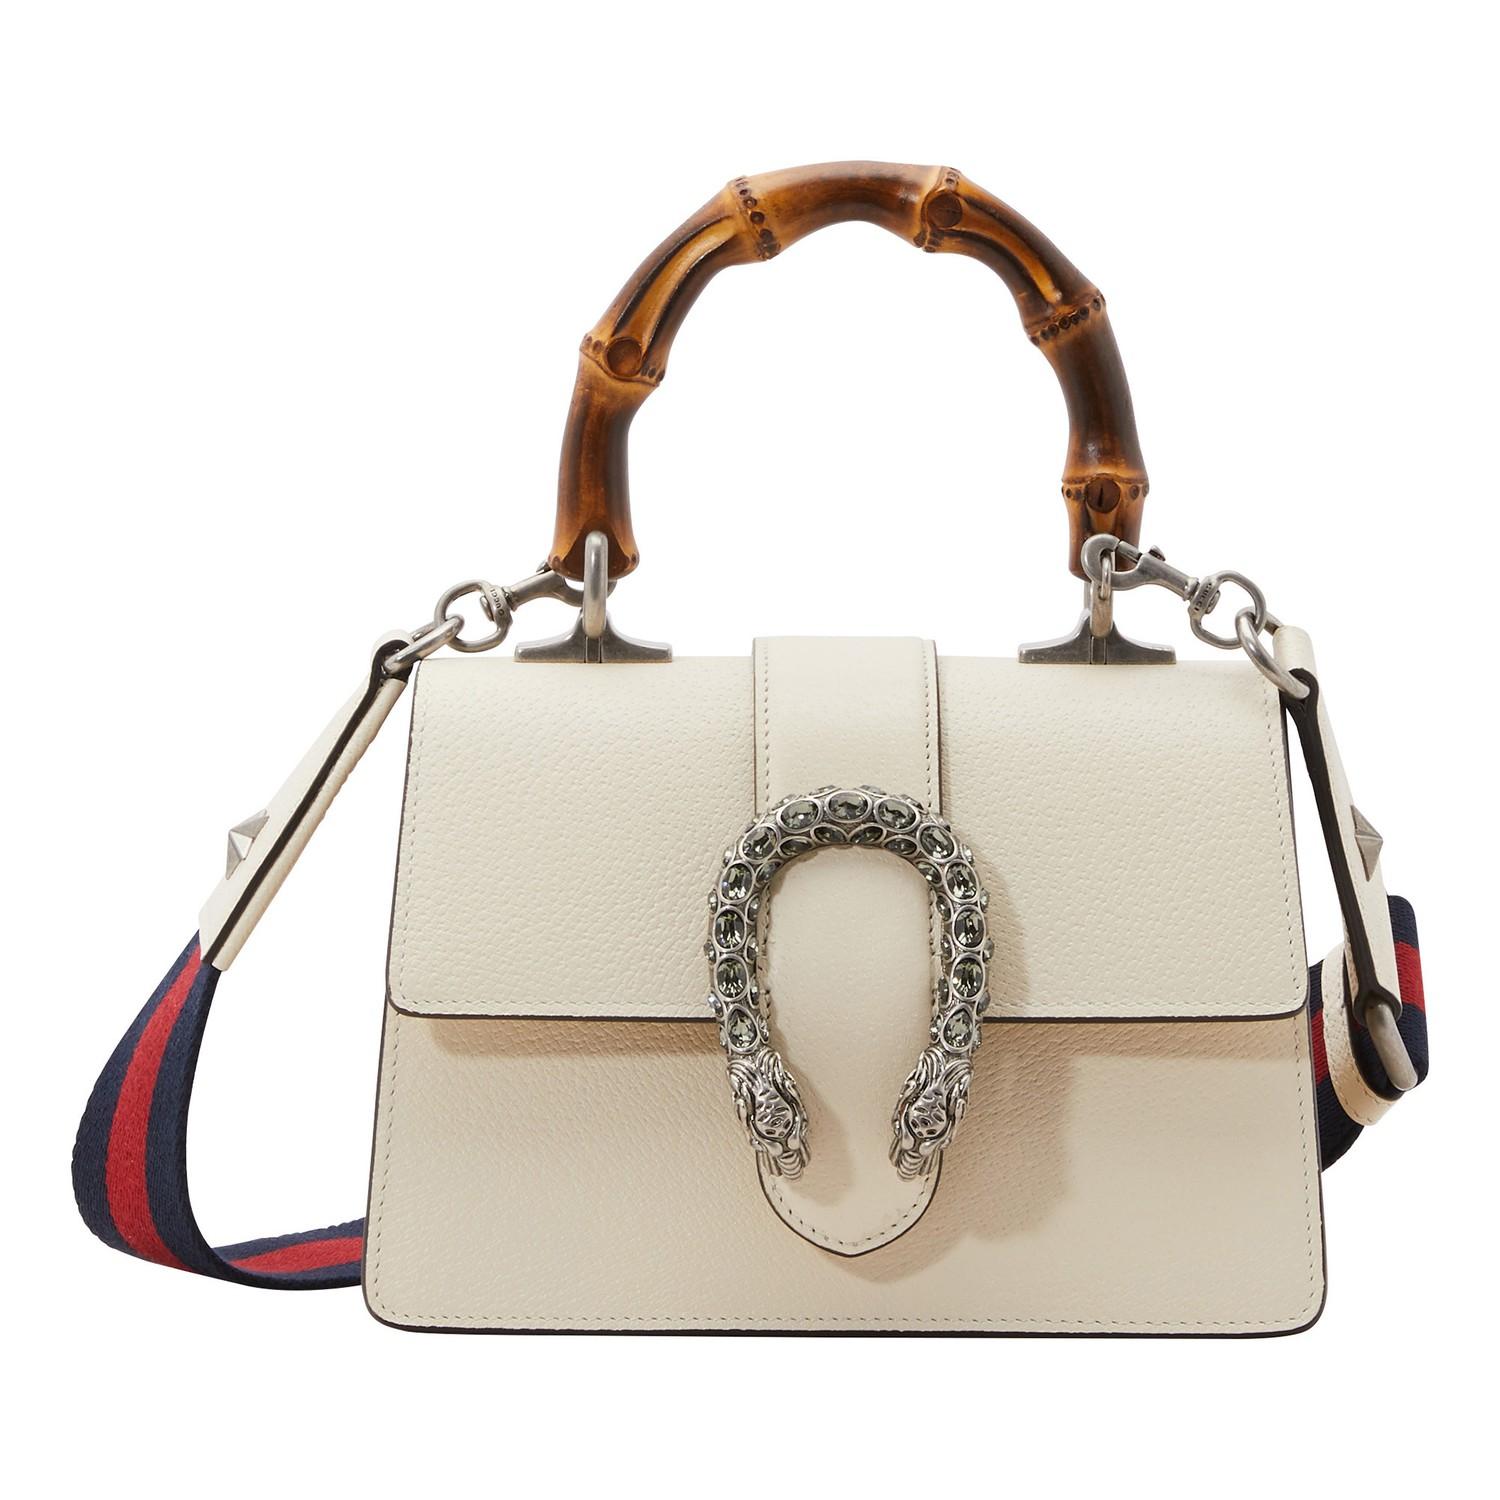 Gucci Handbag Pictures : Gucci Handbags | Bodenuwasusa